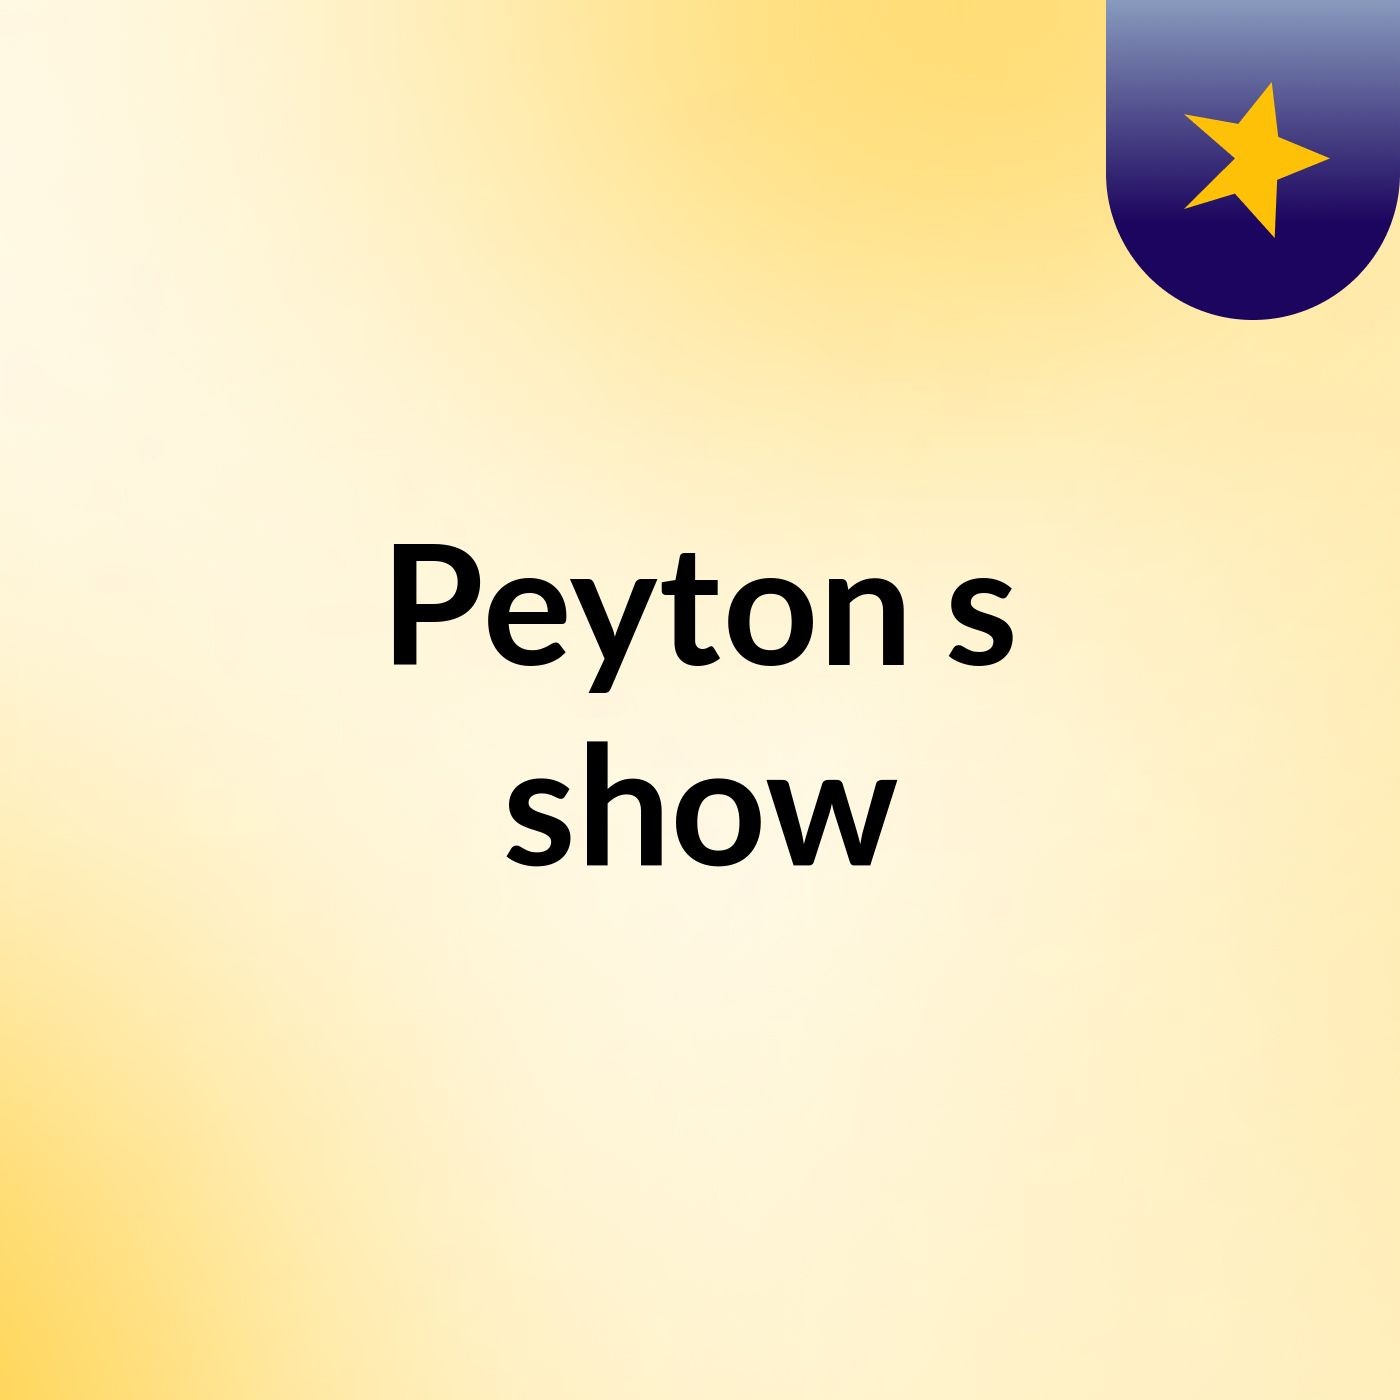 Peyton's show